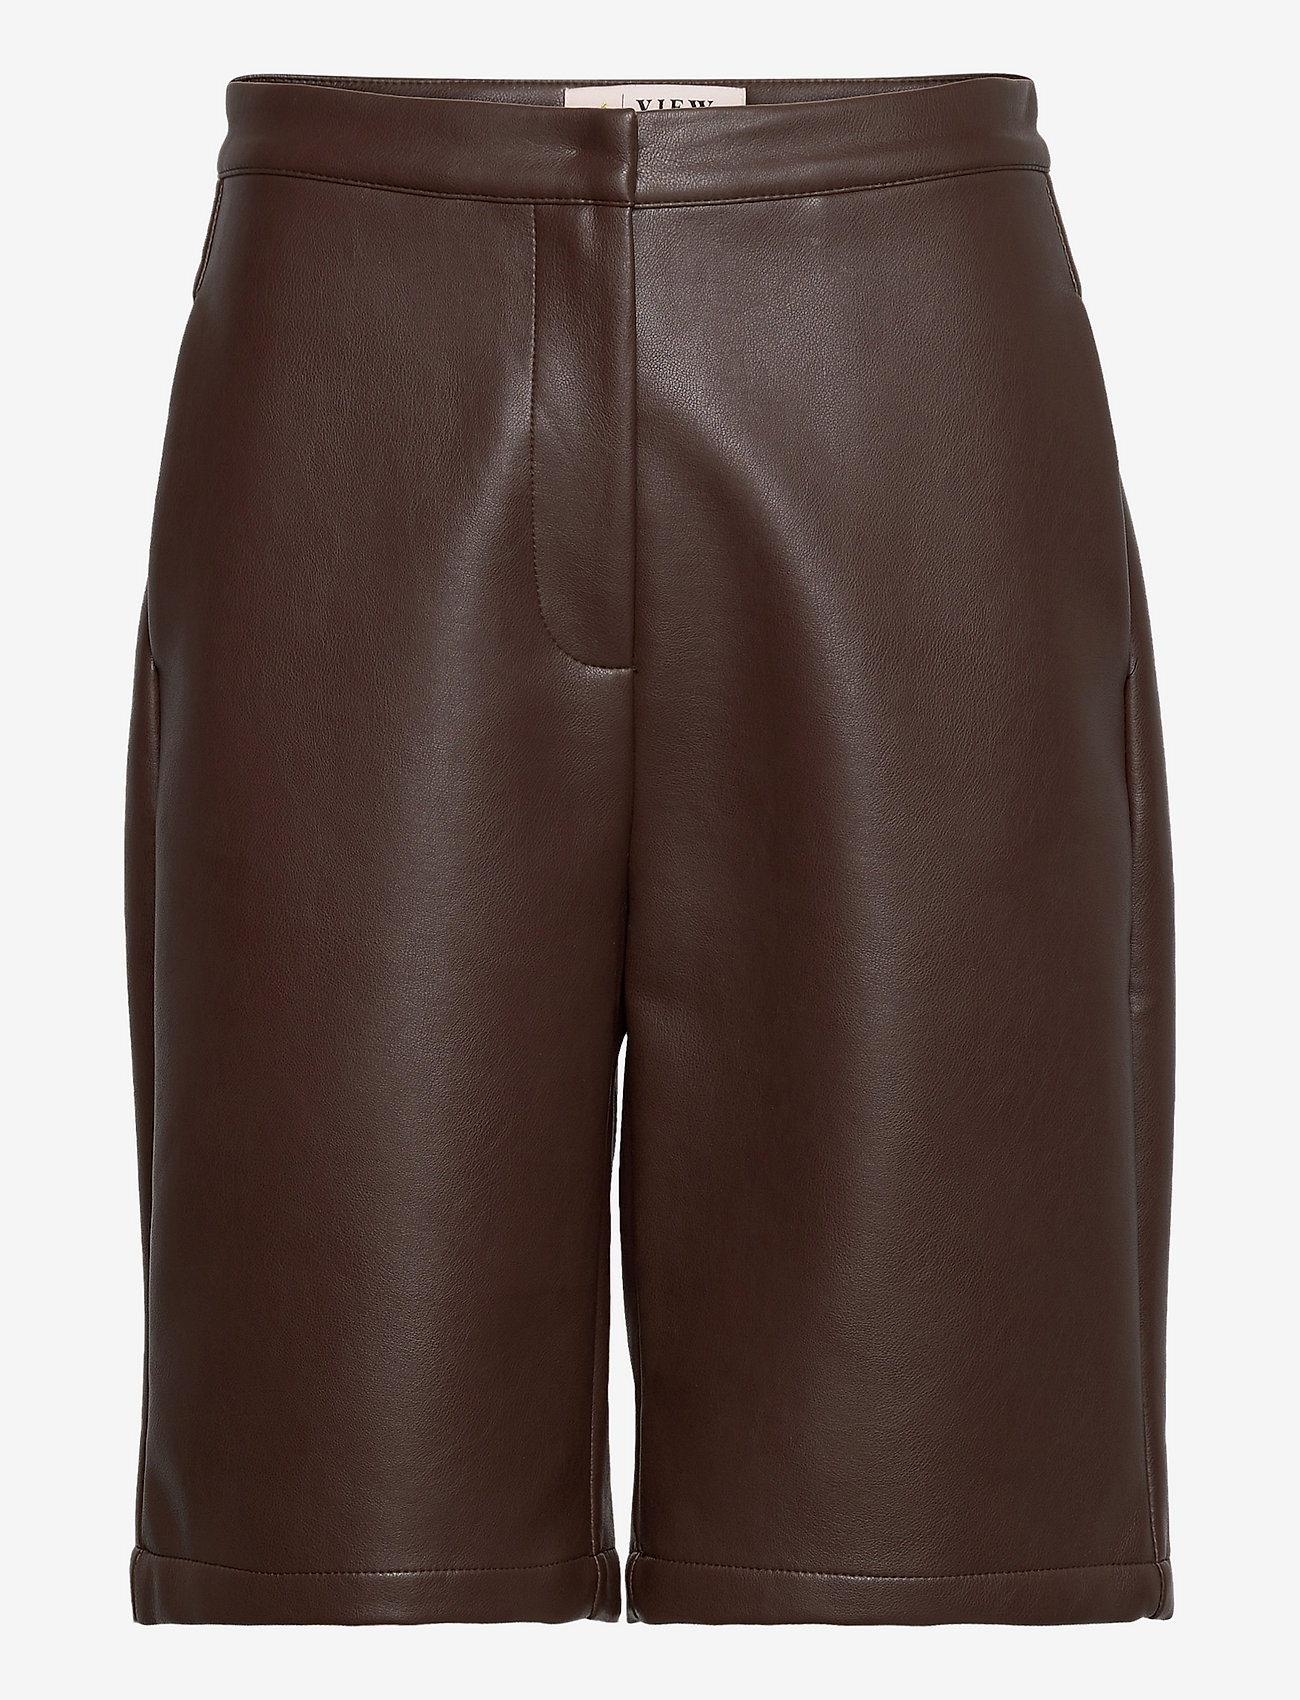 A-View - Aya leather shorts - leren shorts - brown - 0